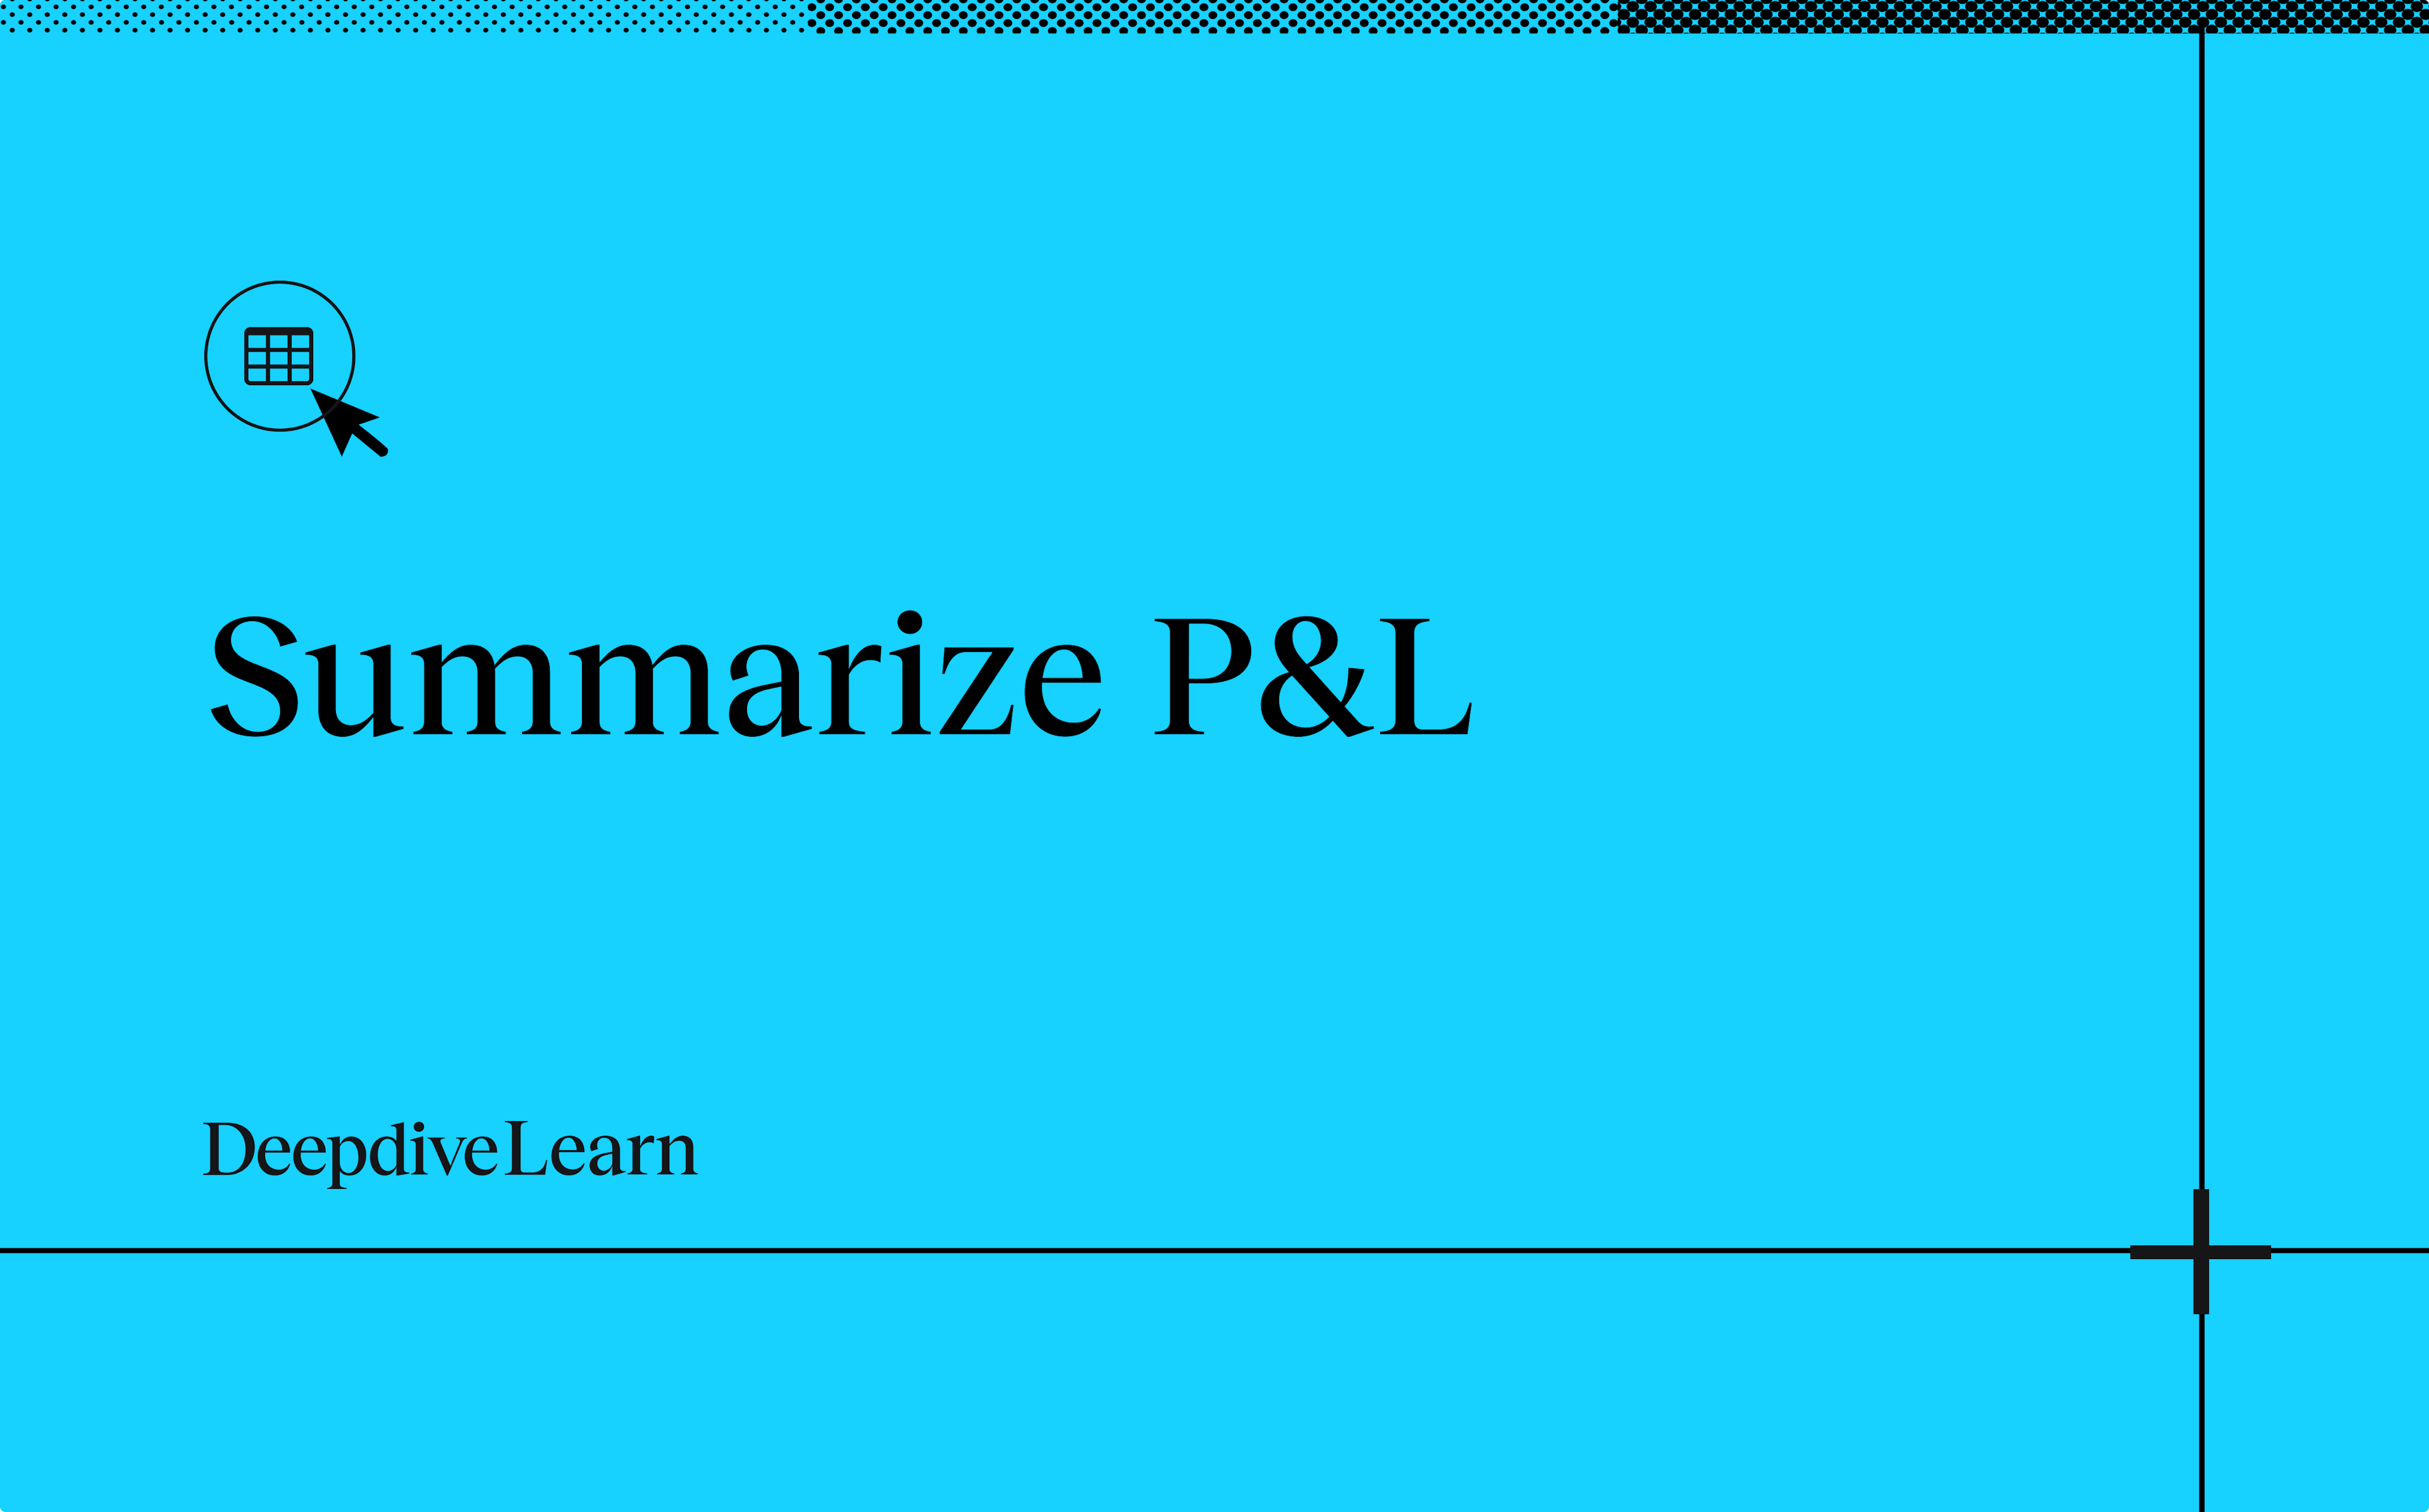 Summarize P&L by Deepdive Learn